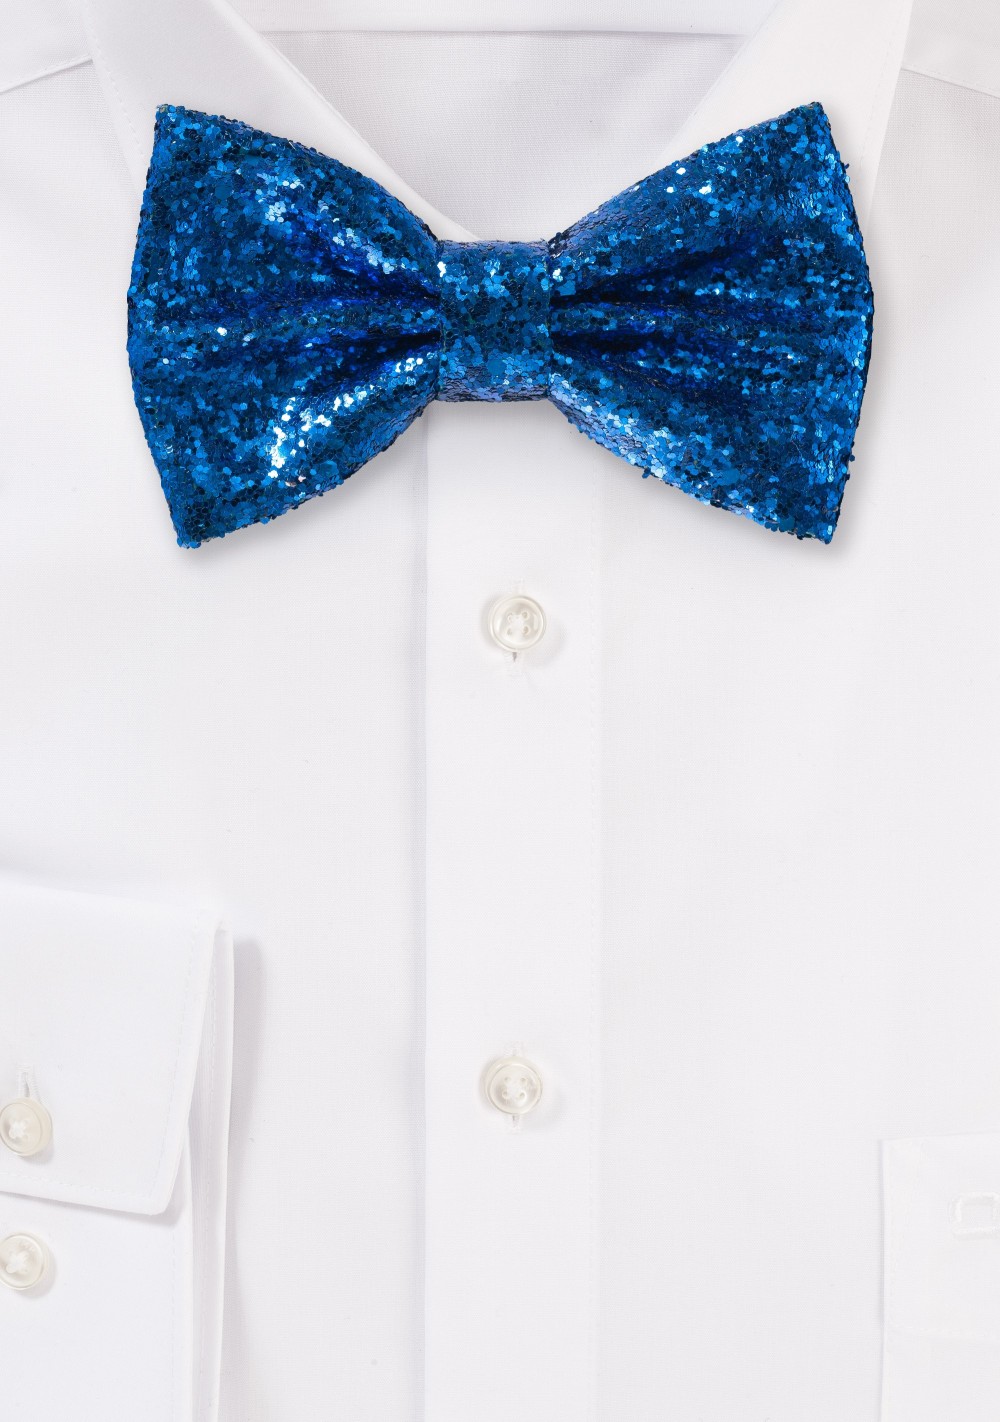 Glitter Bow Tie in Royal Blue metallic blue mens bowties